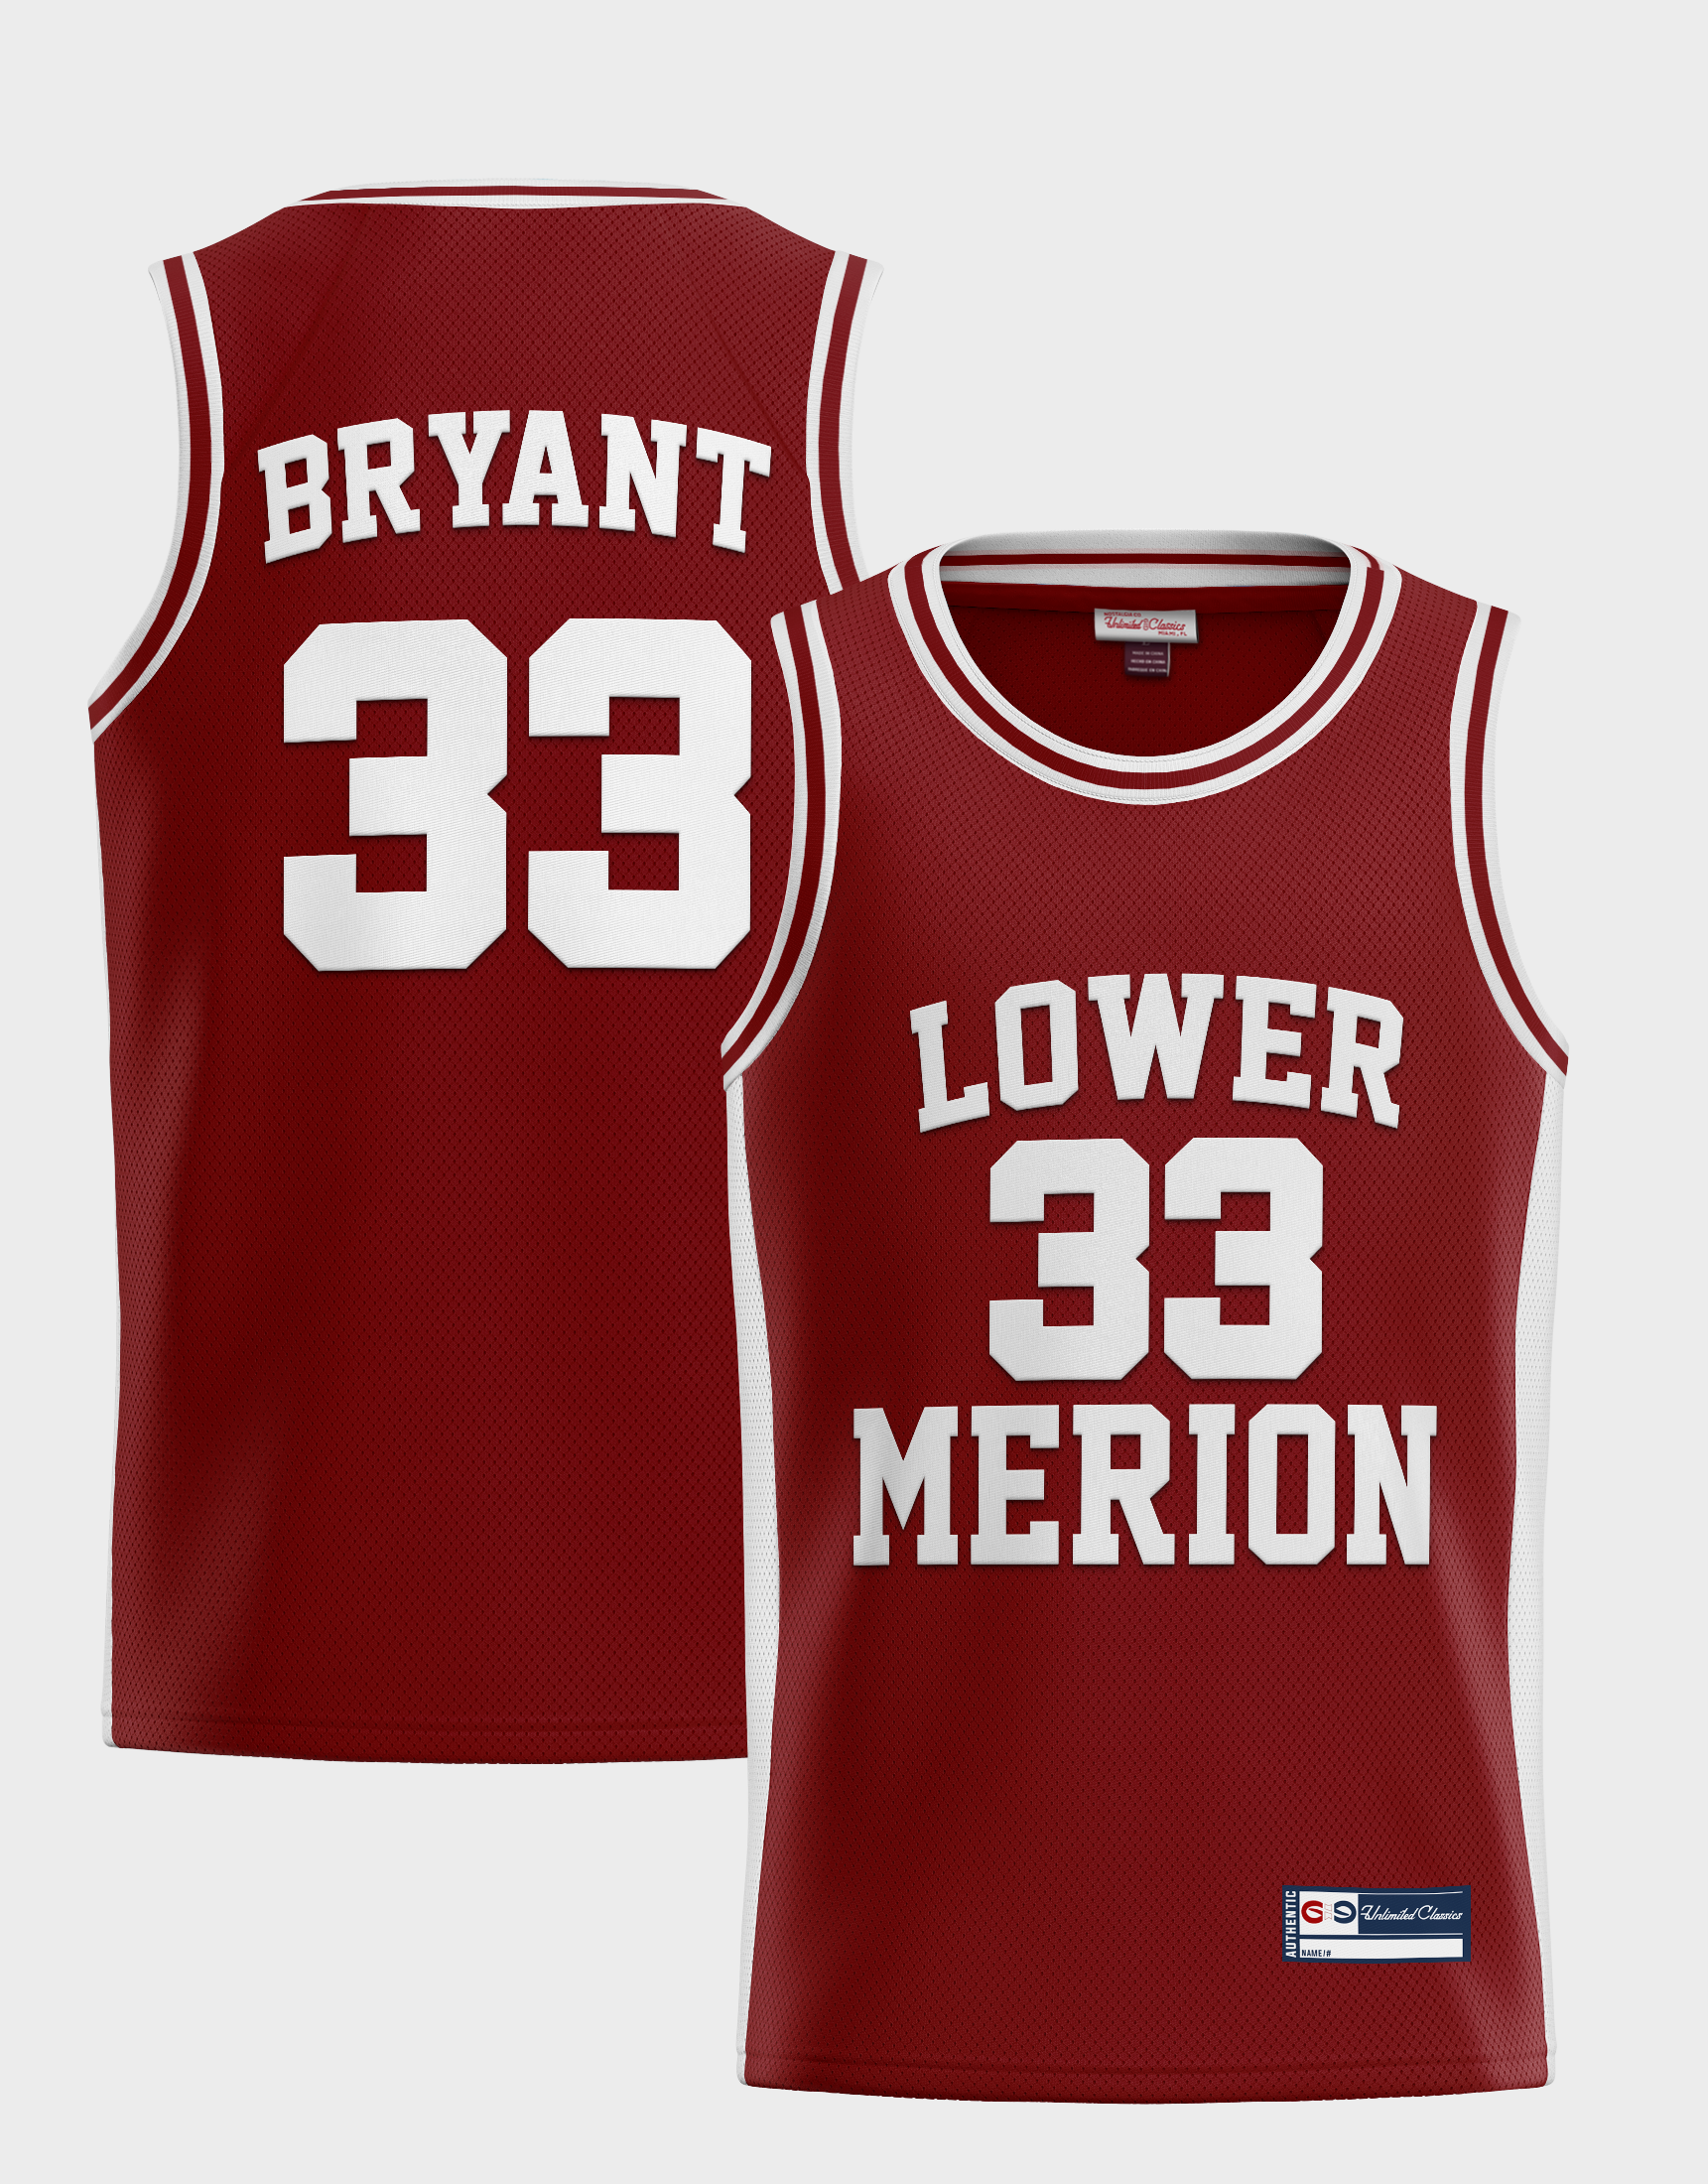 Kobe Bryant #33 Lower Merion High School Jersey